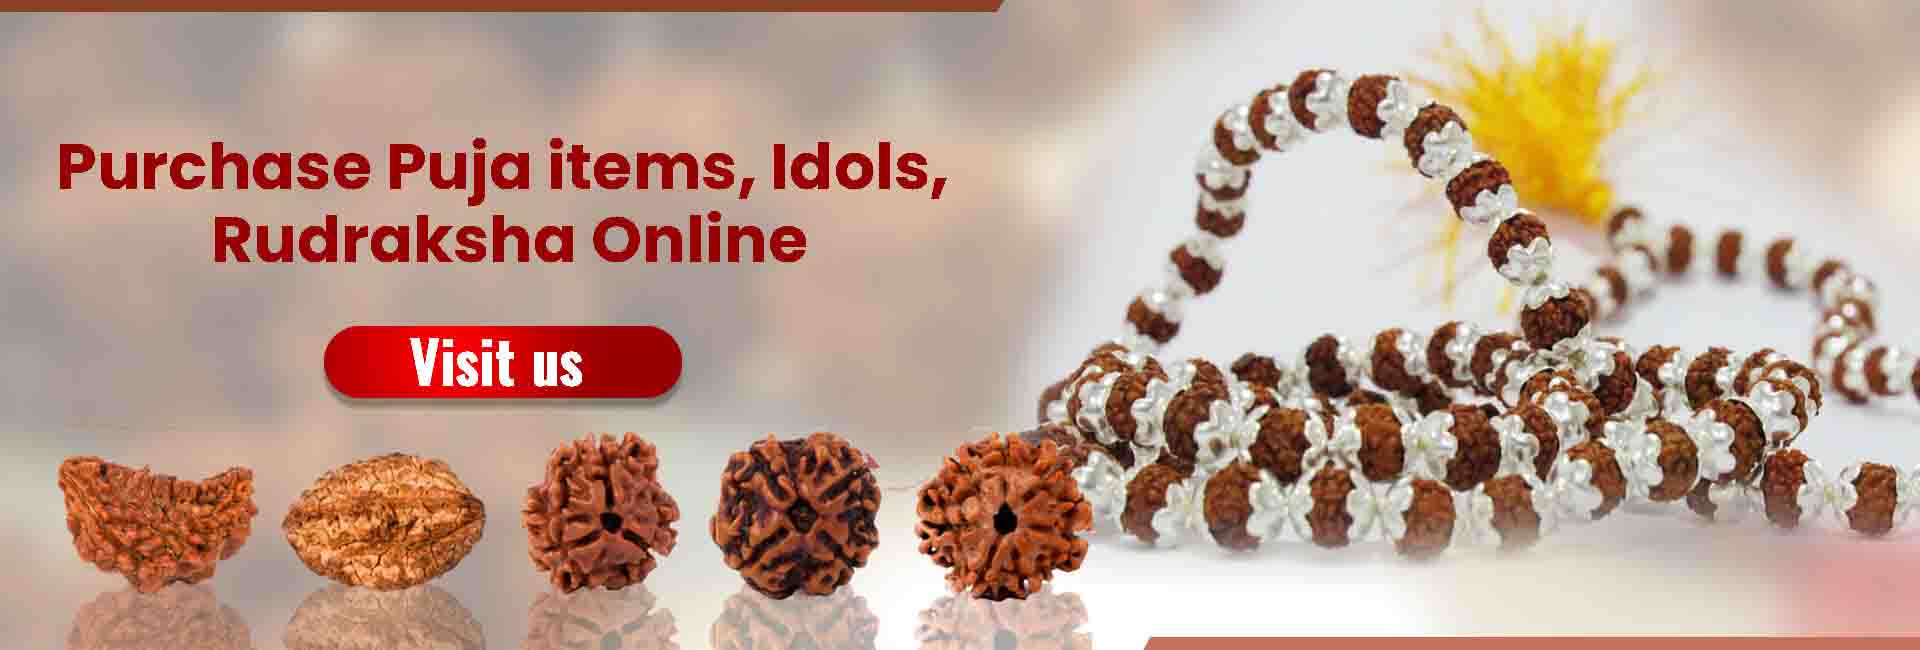 Purchase Puja Item Rudraksha, idols, online on bhagwanbhajan